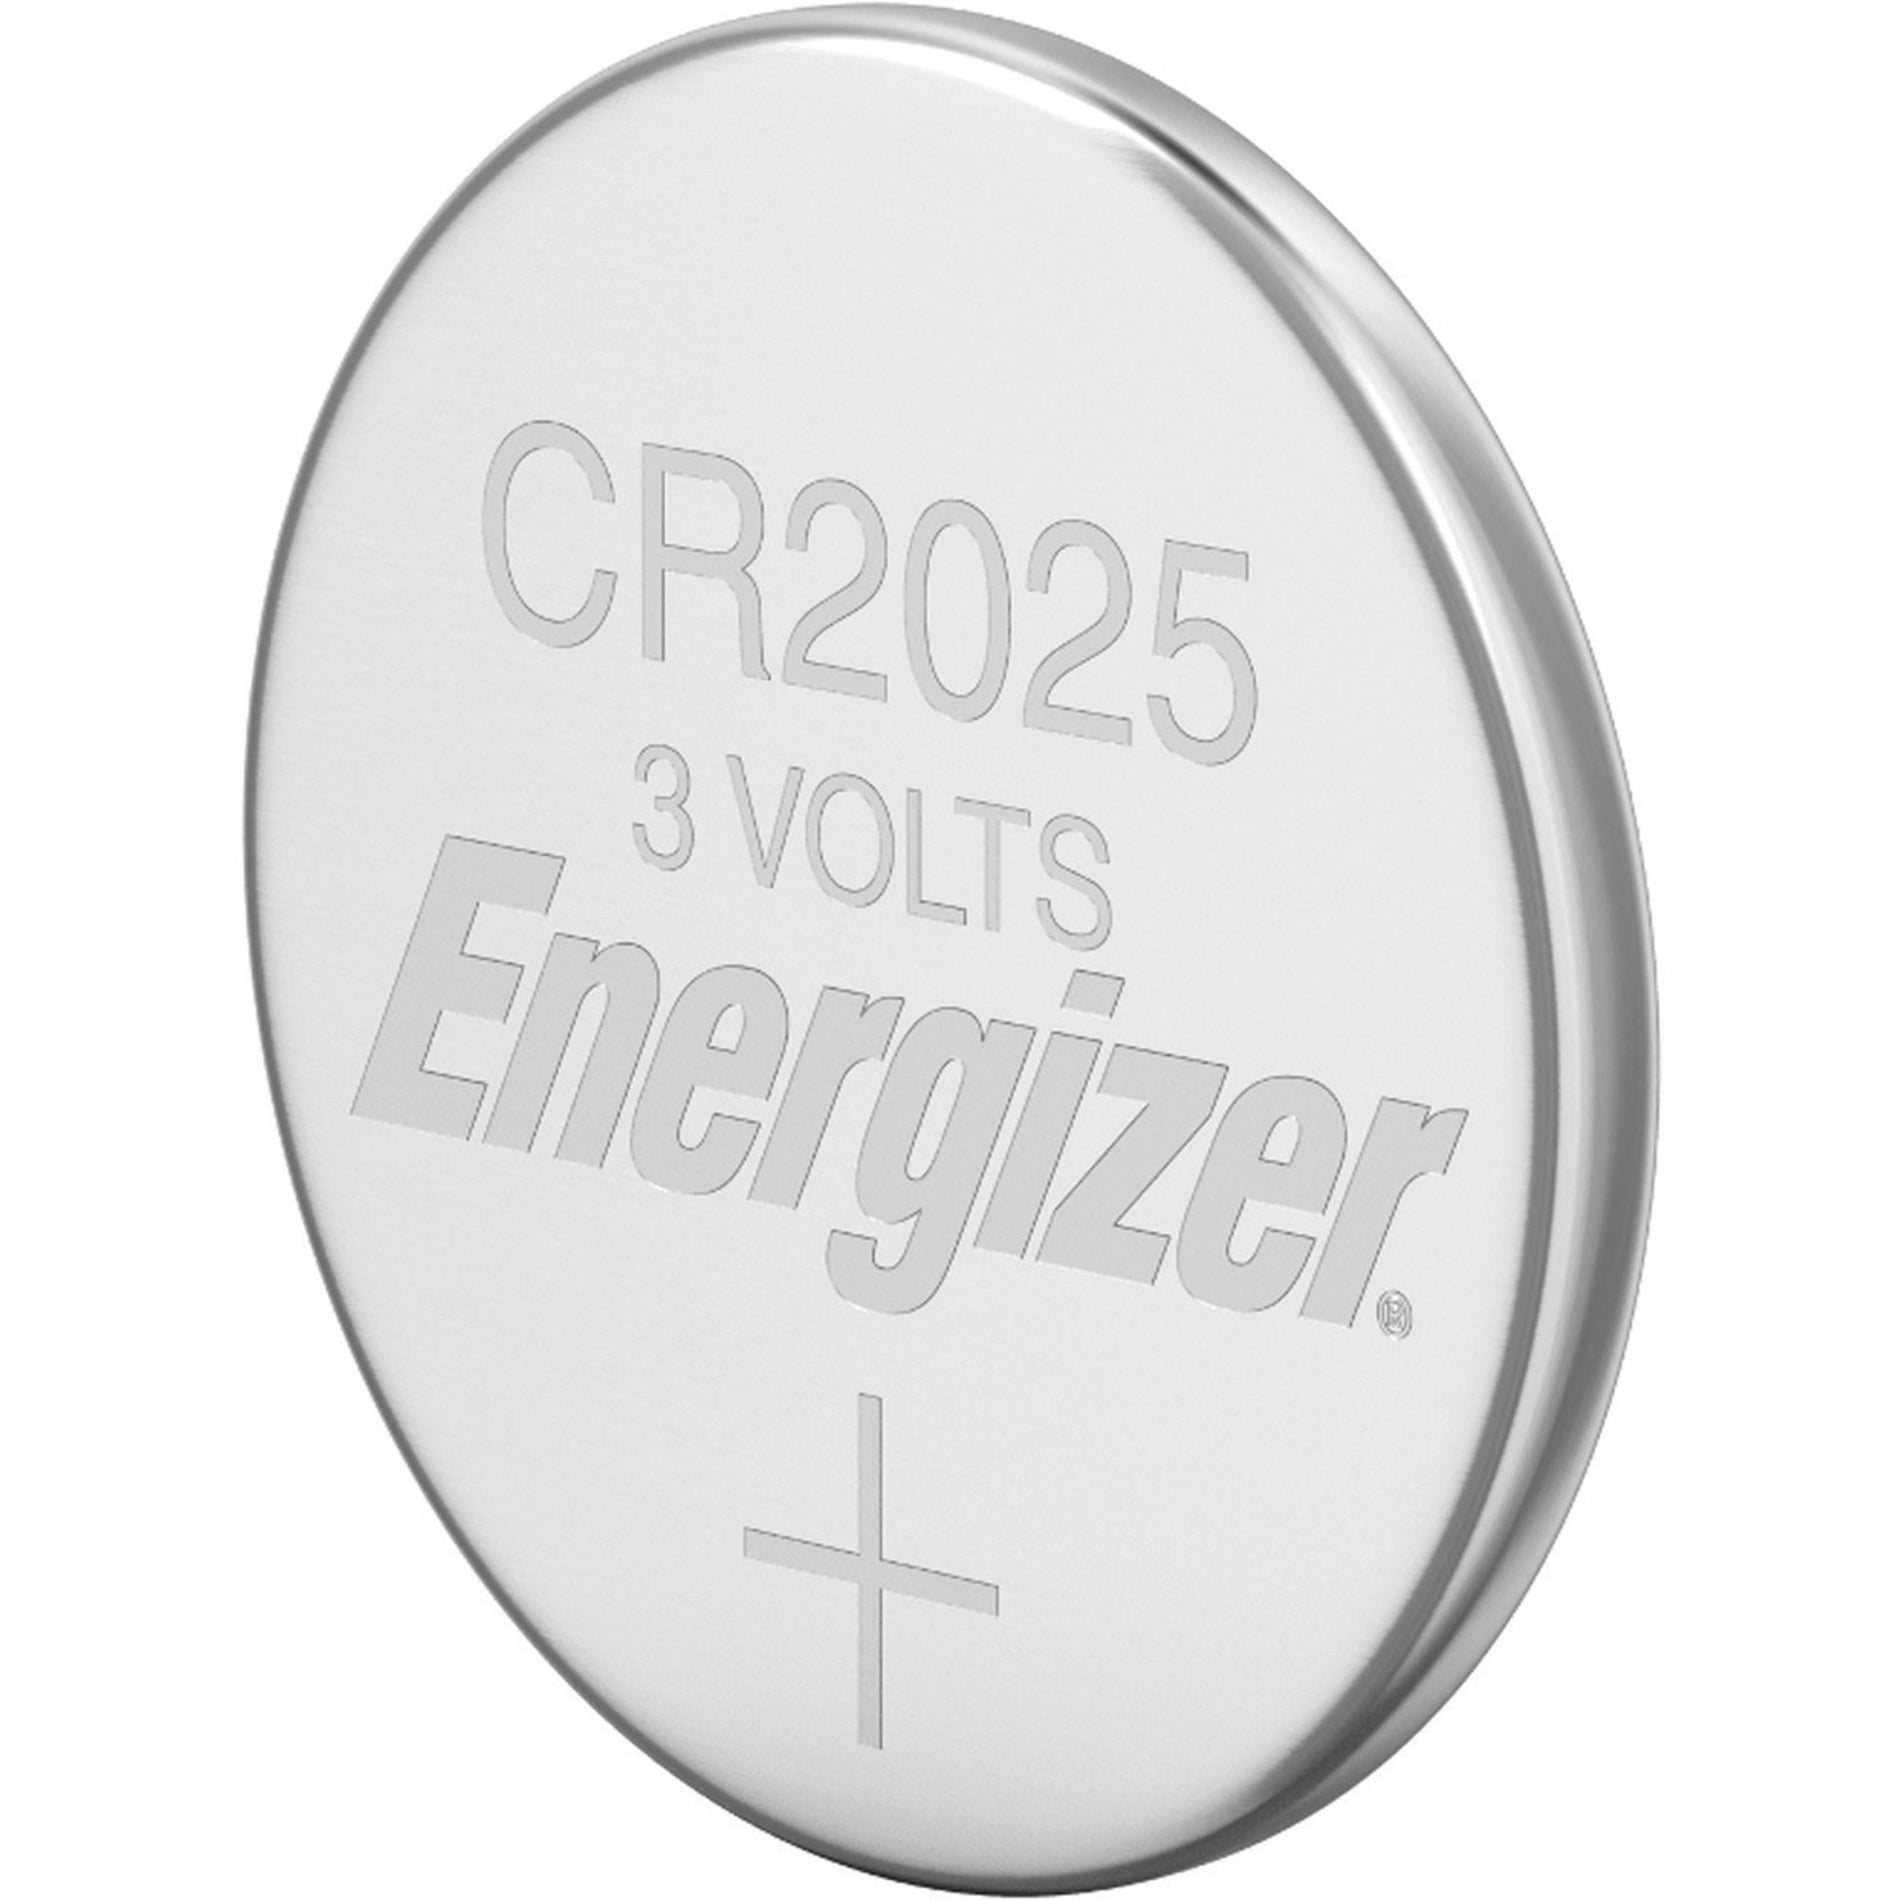 Energizer ECR-2025BP 2025 Lithium Coin Battery, 3 Volt, Multipurpose